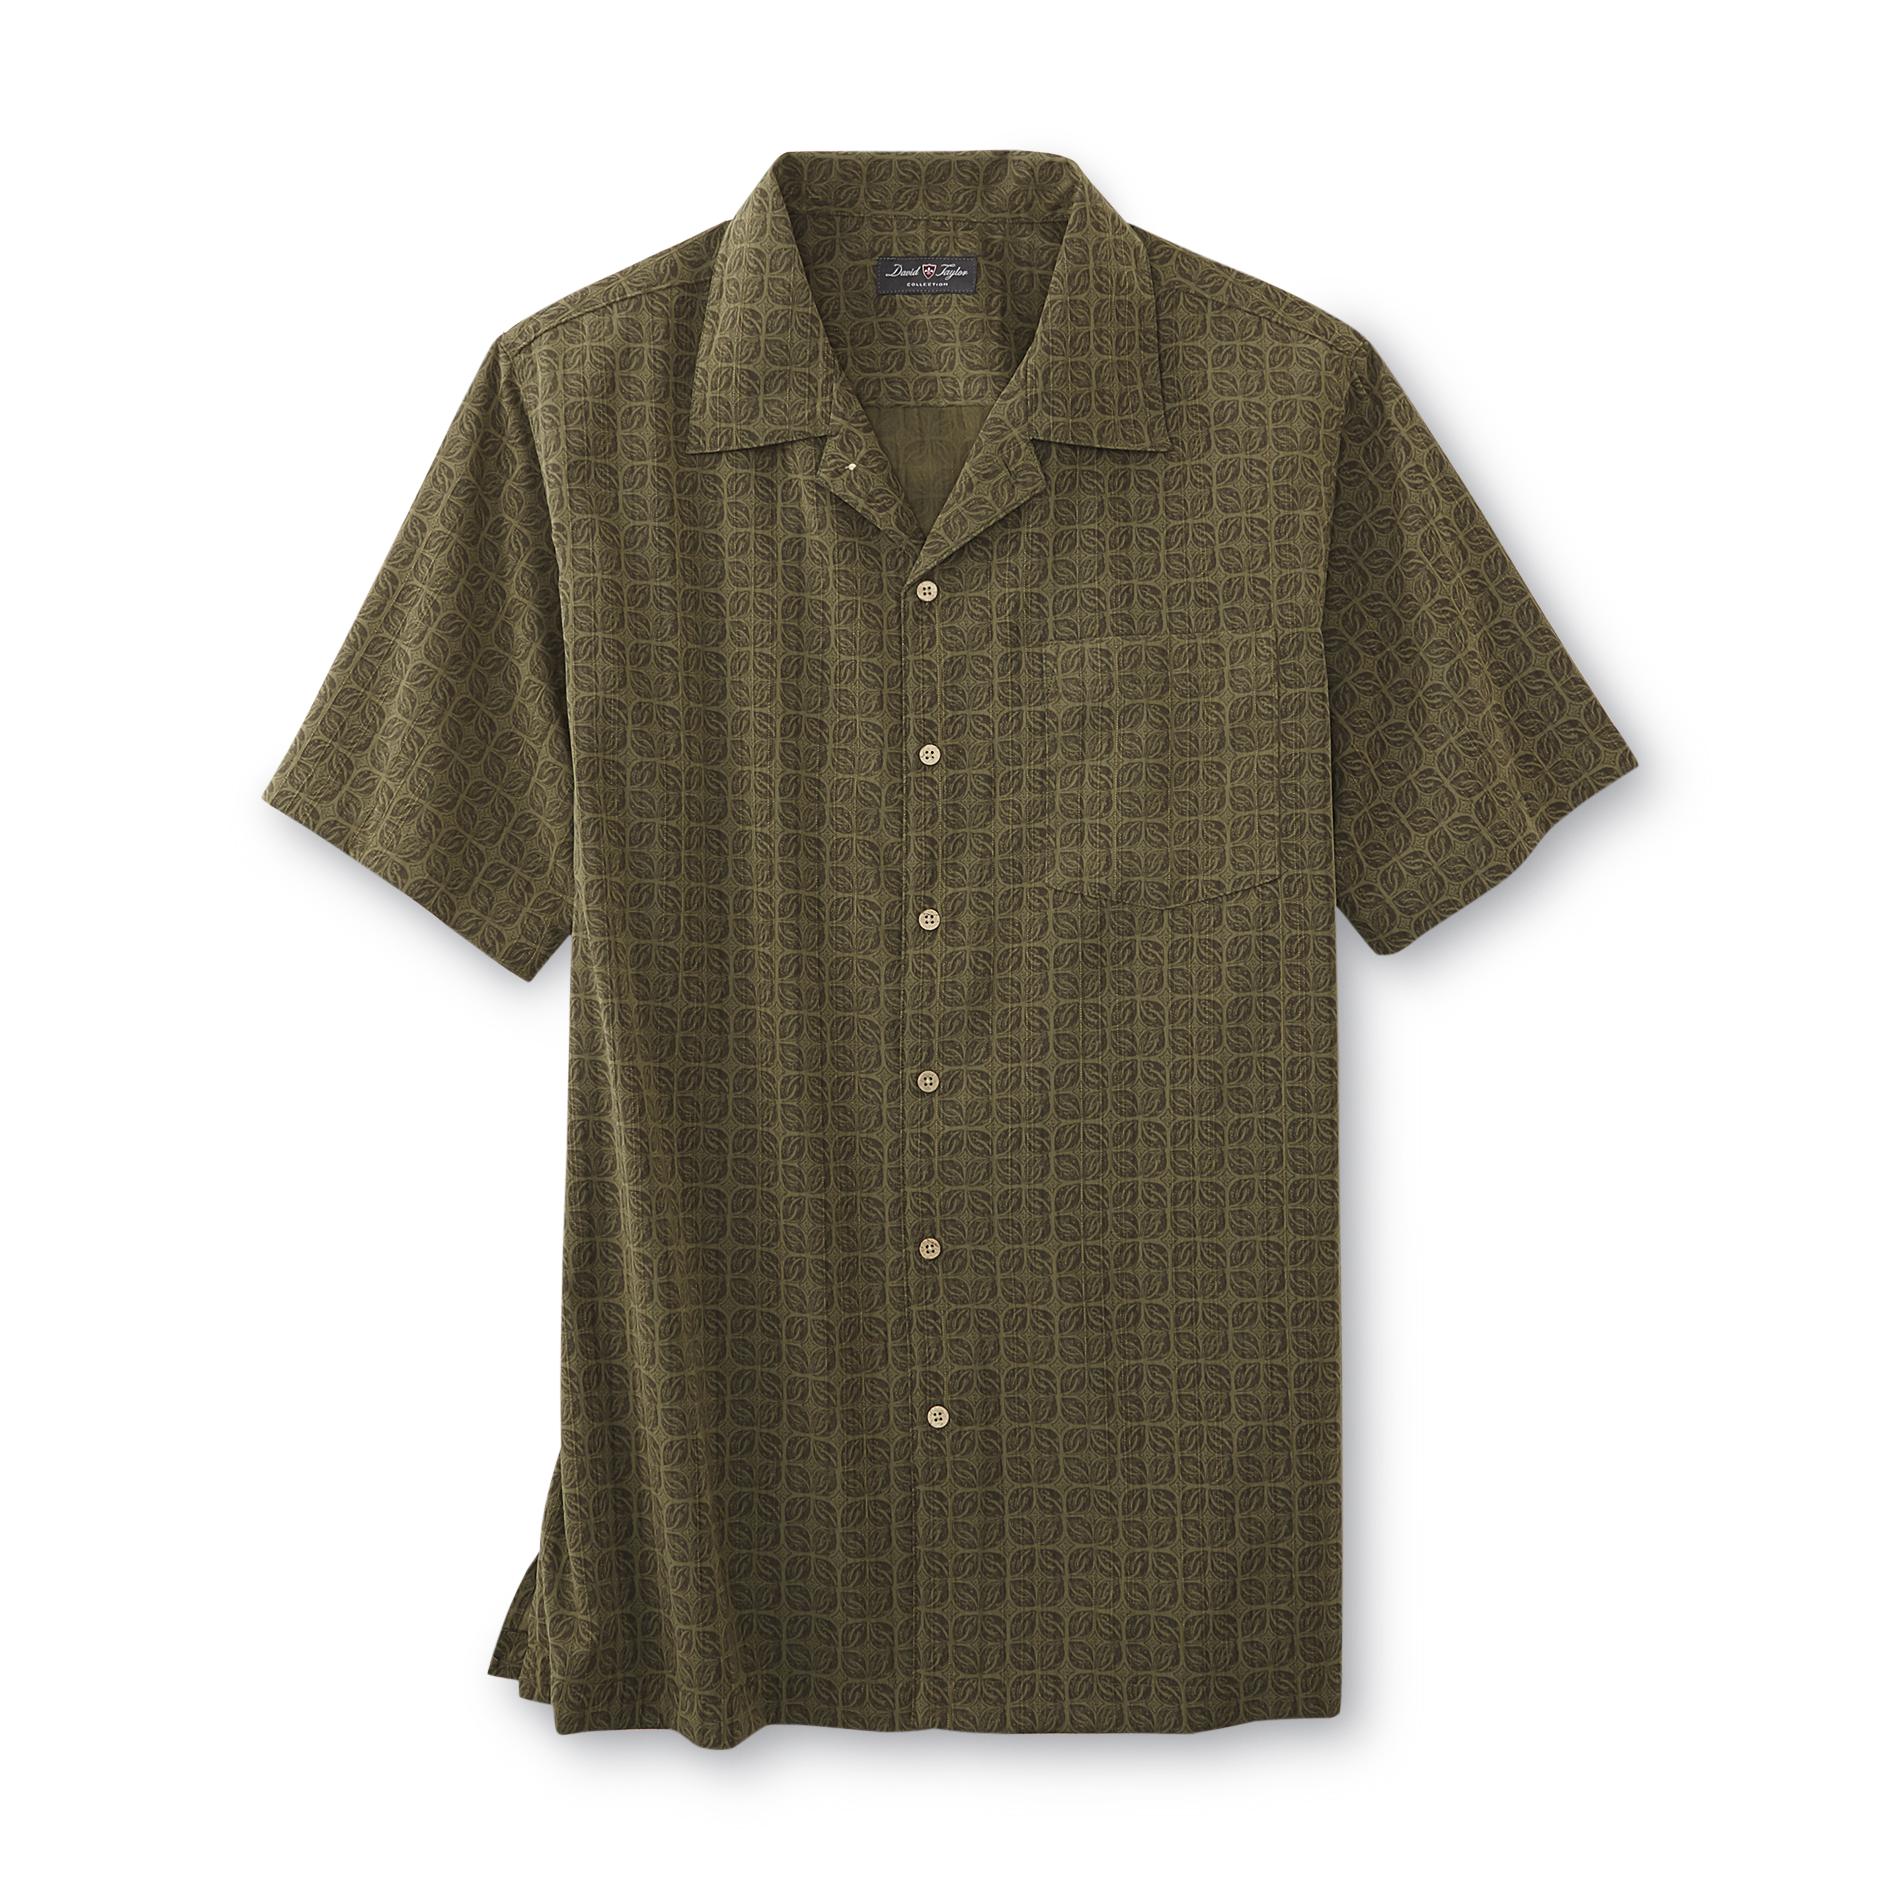 David Taylor Collection Men's Camp Shirt - Leaf Print